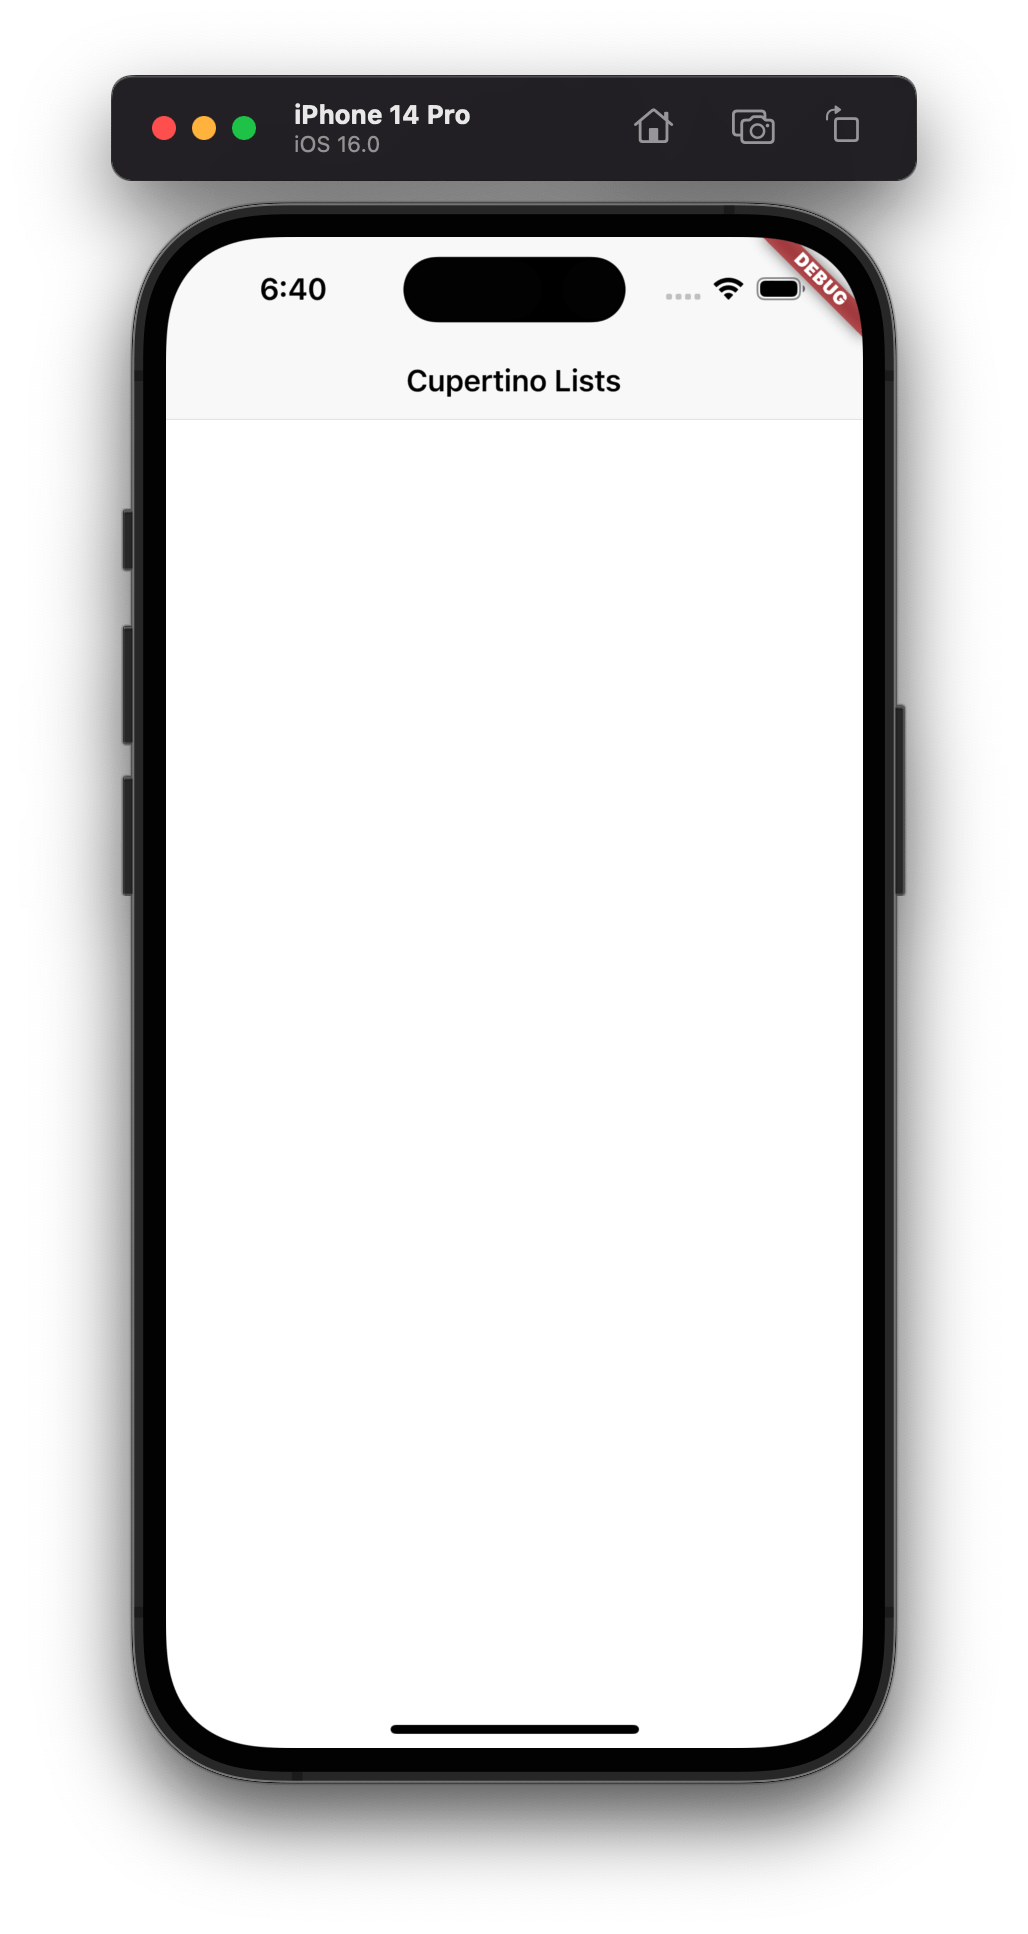 Empty screen